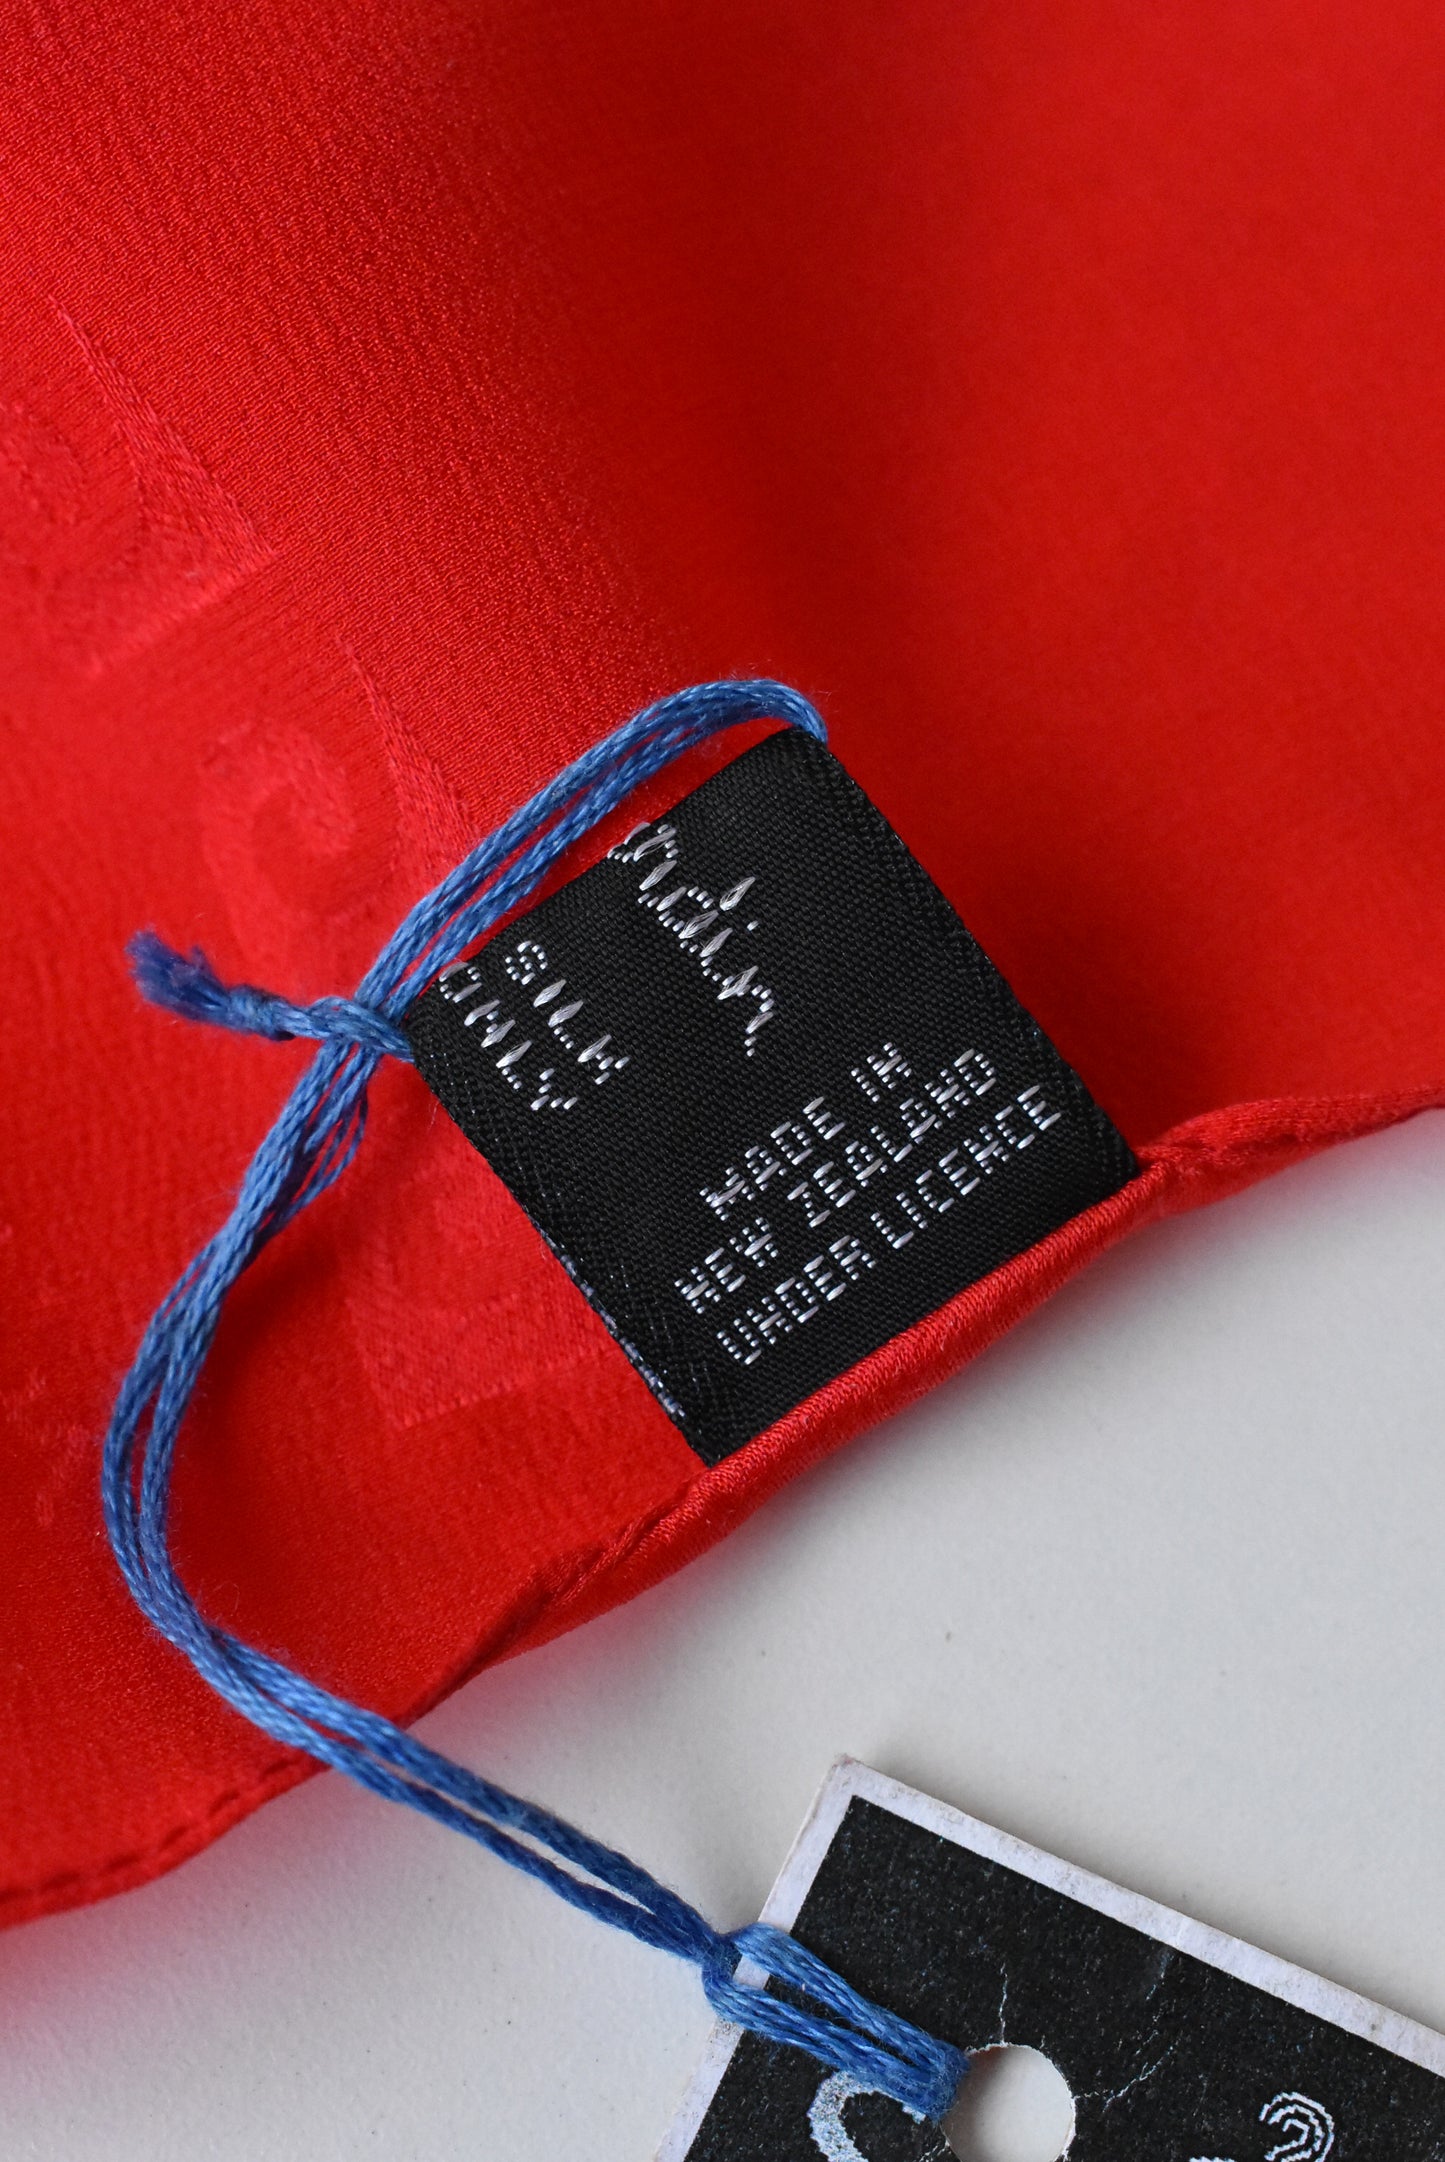 Pierre Cardin bright scarlet silk scarf - rectangular